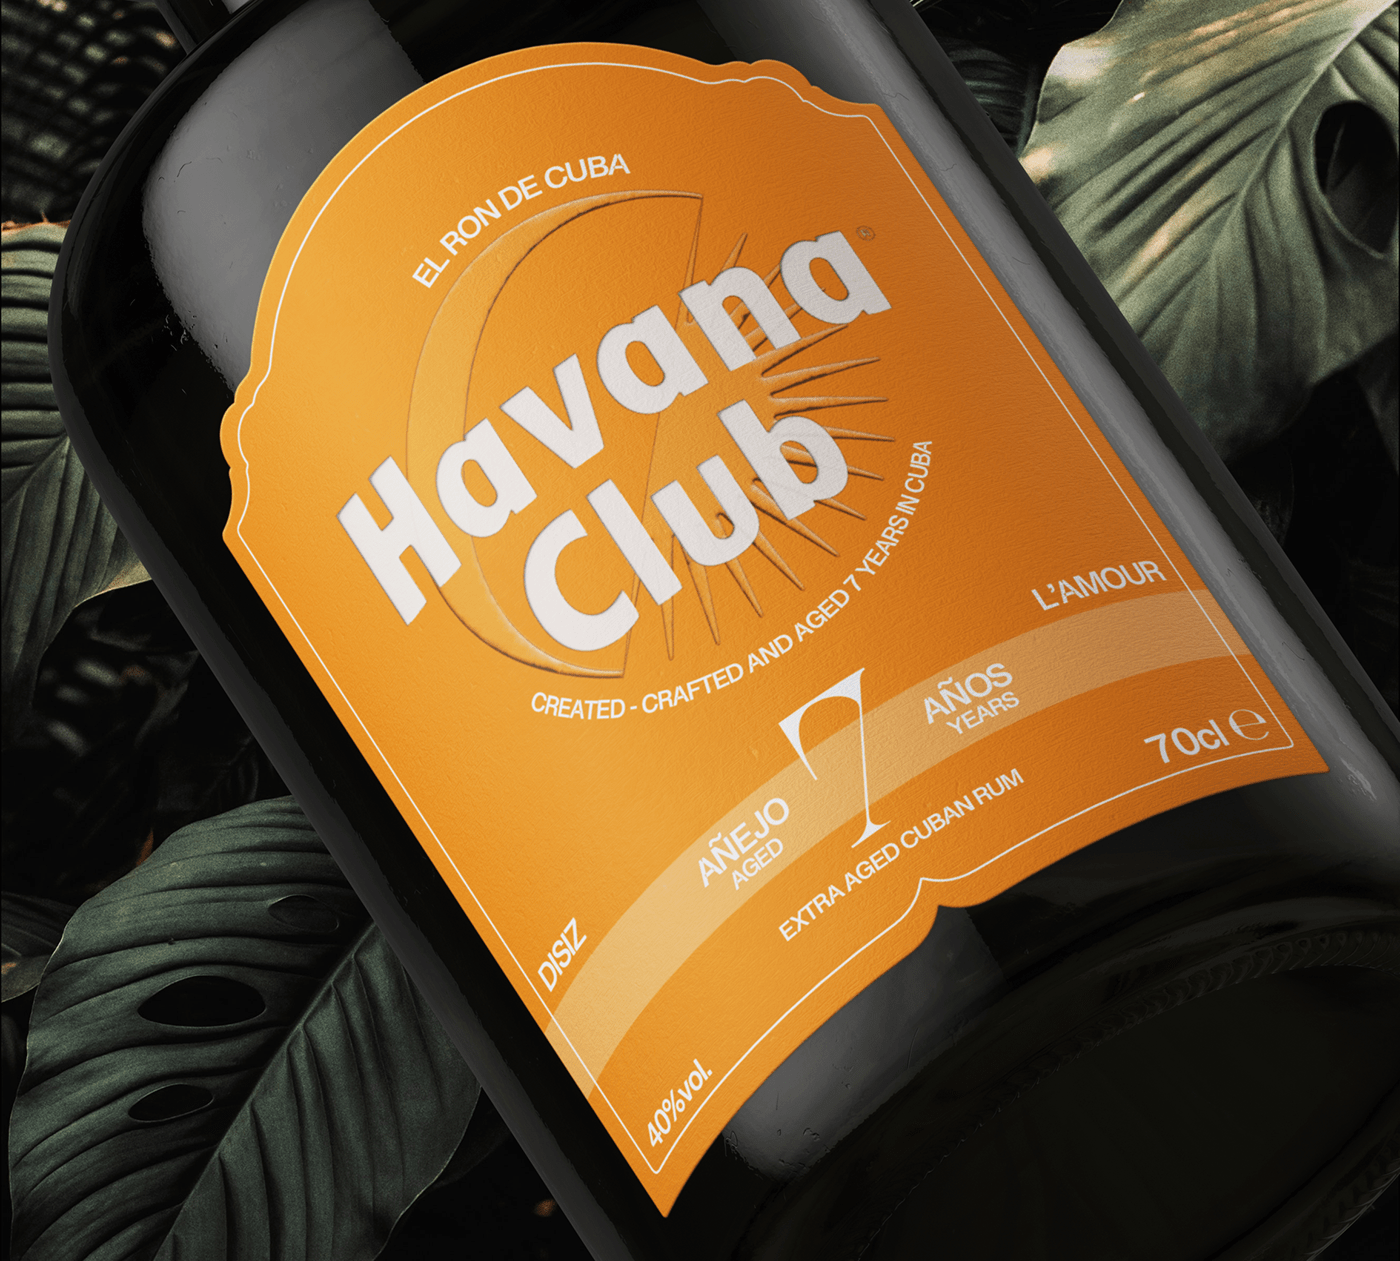 Havana Club disiz Packaging visual identity